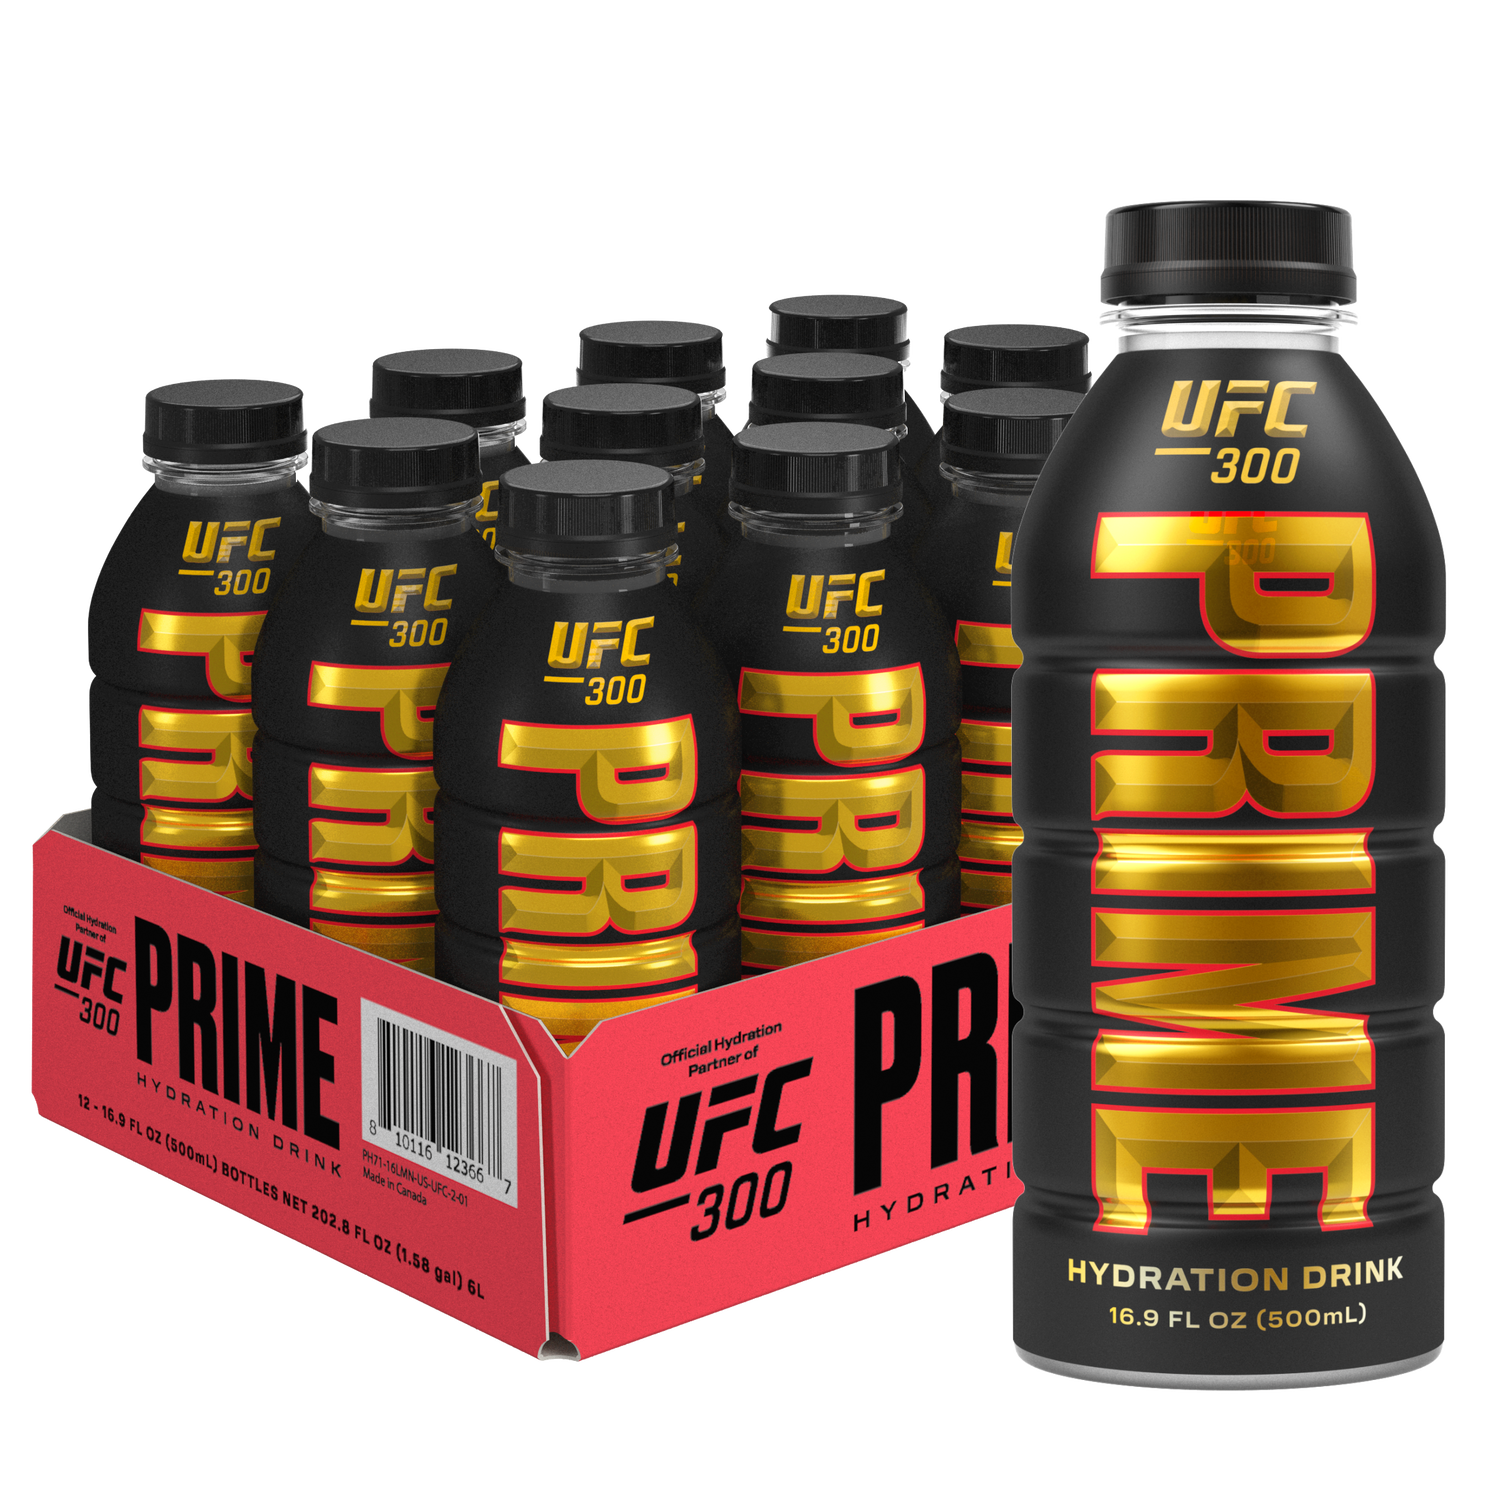 PRIME Hydration Drink X UFC 300 - 16.9Oz. (12 Bottles)